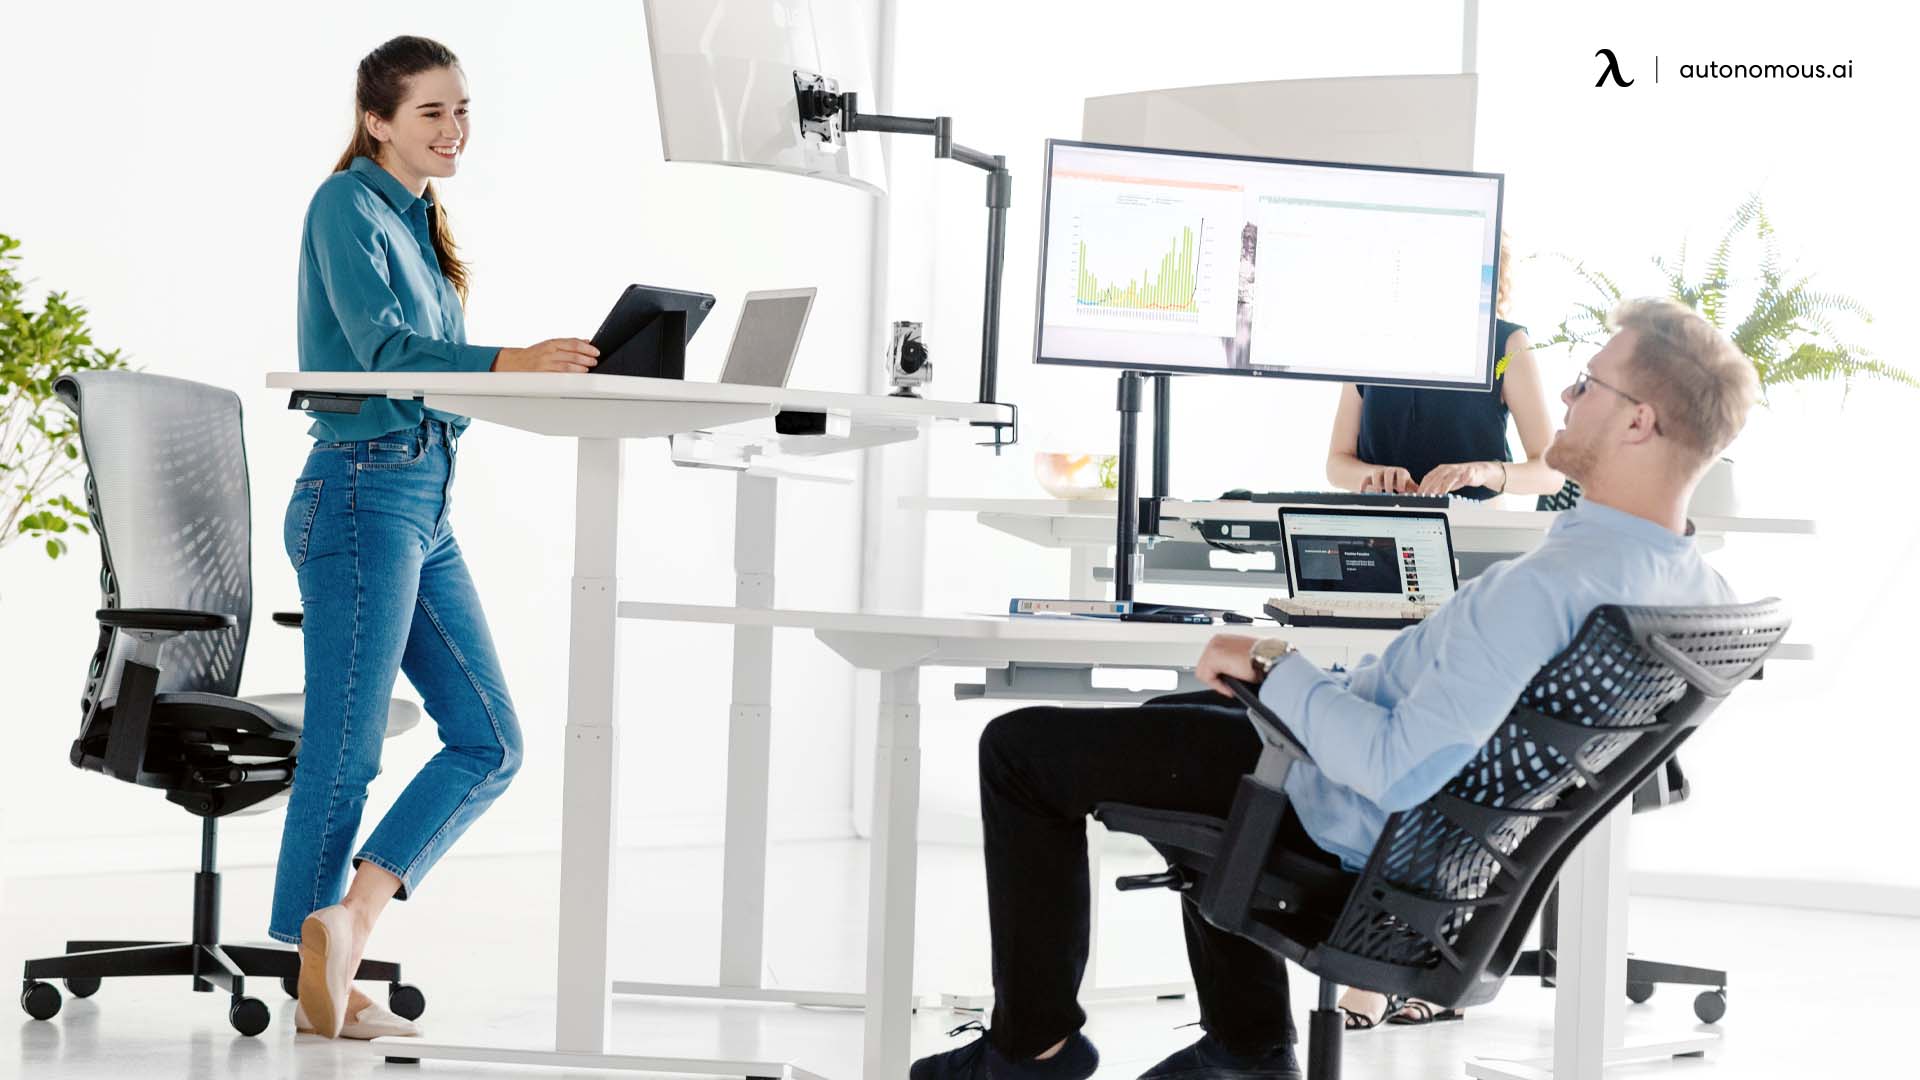 Proven science to improve office ergonomics